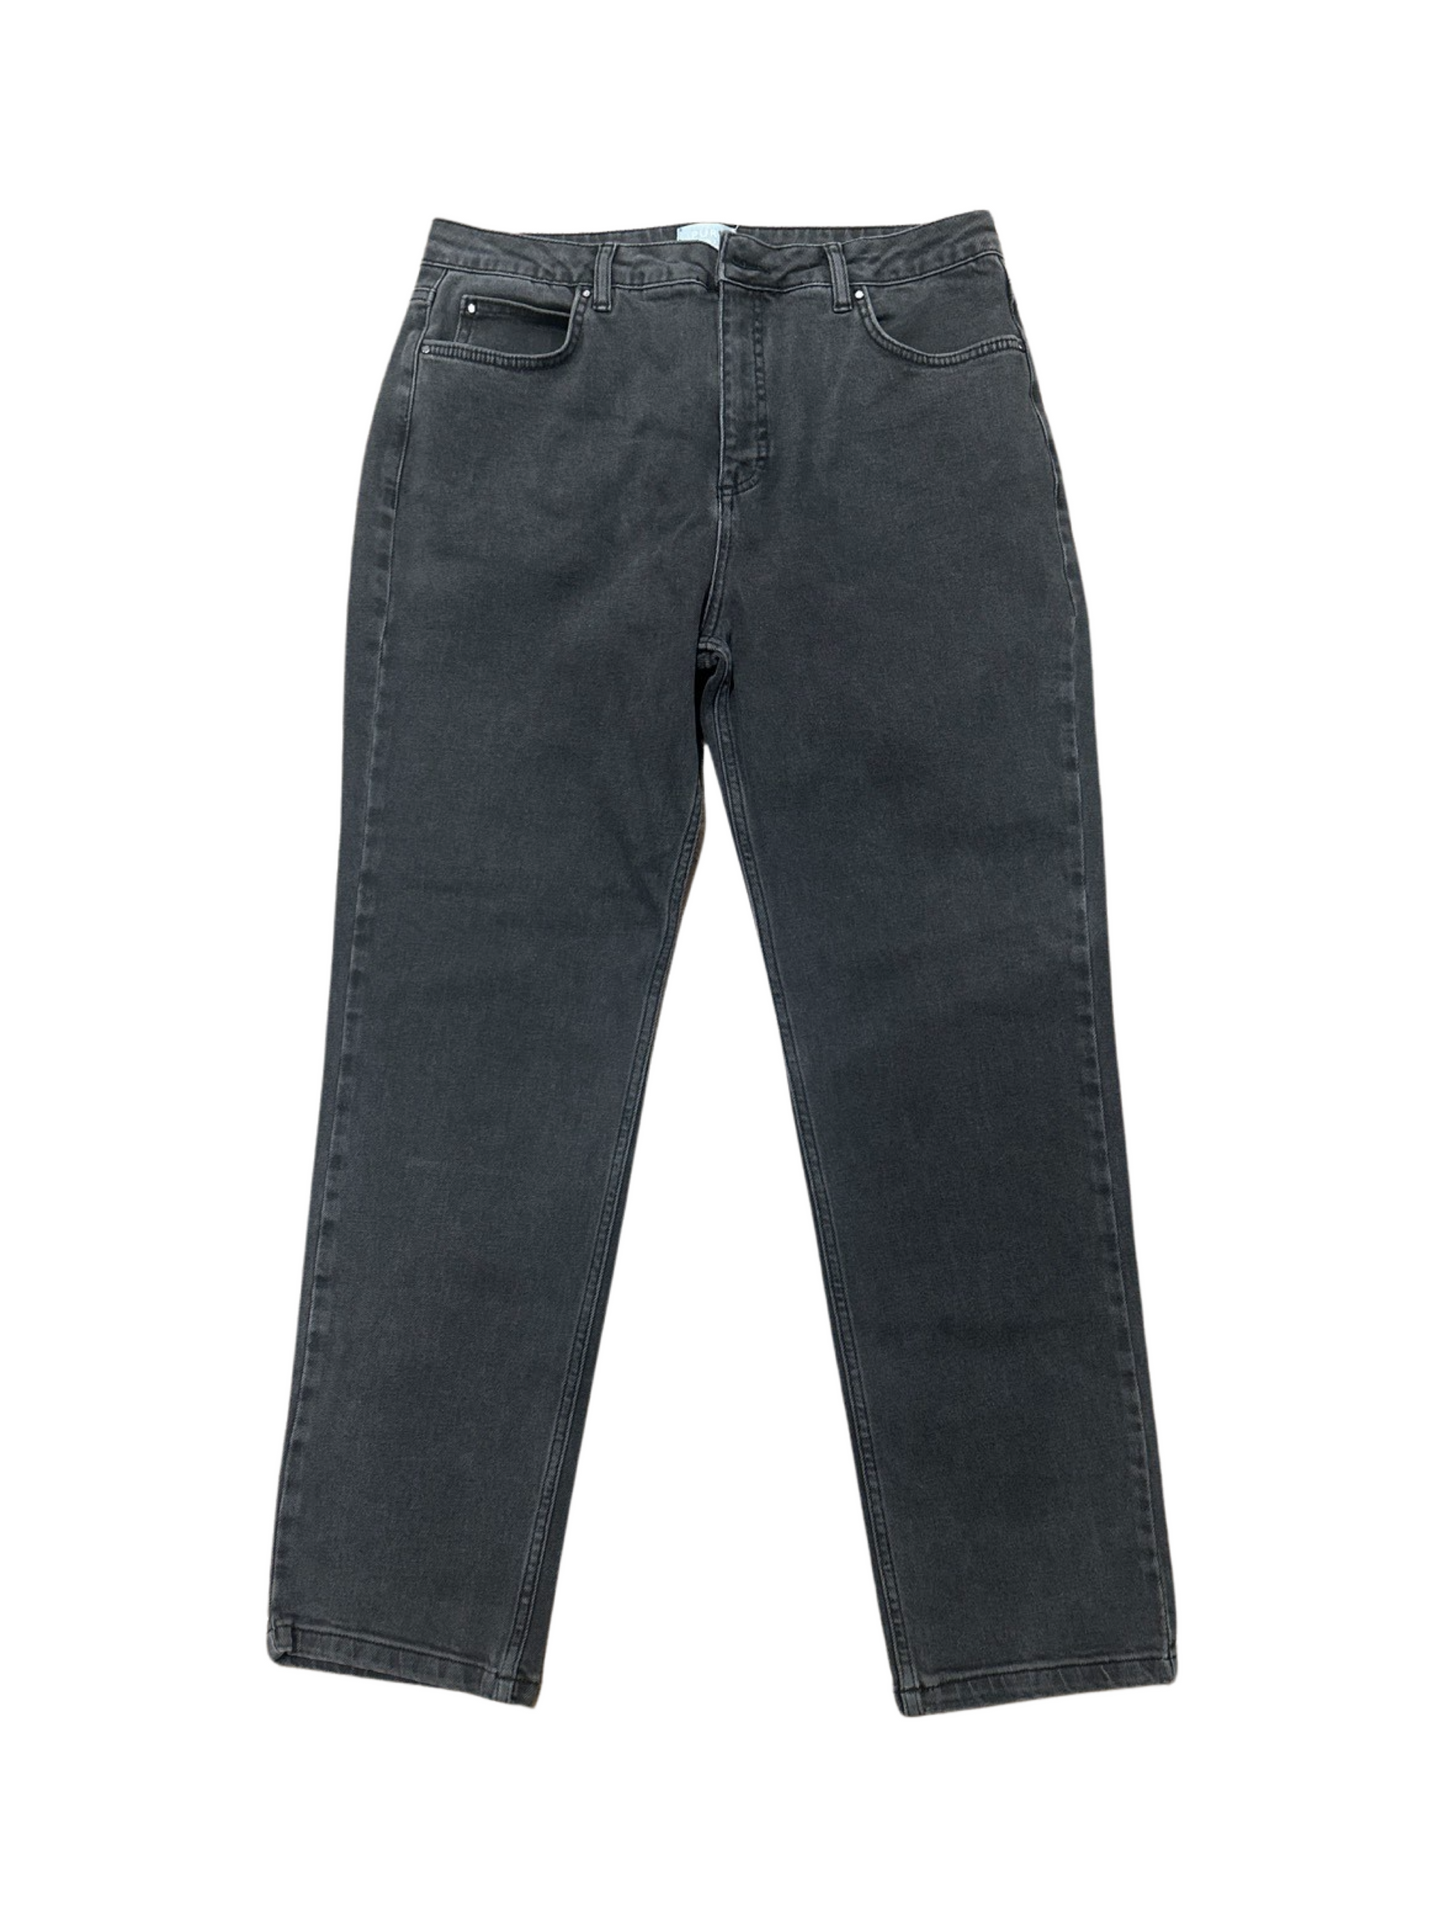 Pure Denim Belgrave Charcoal  Jeans S10